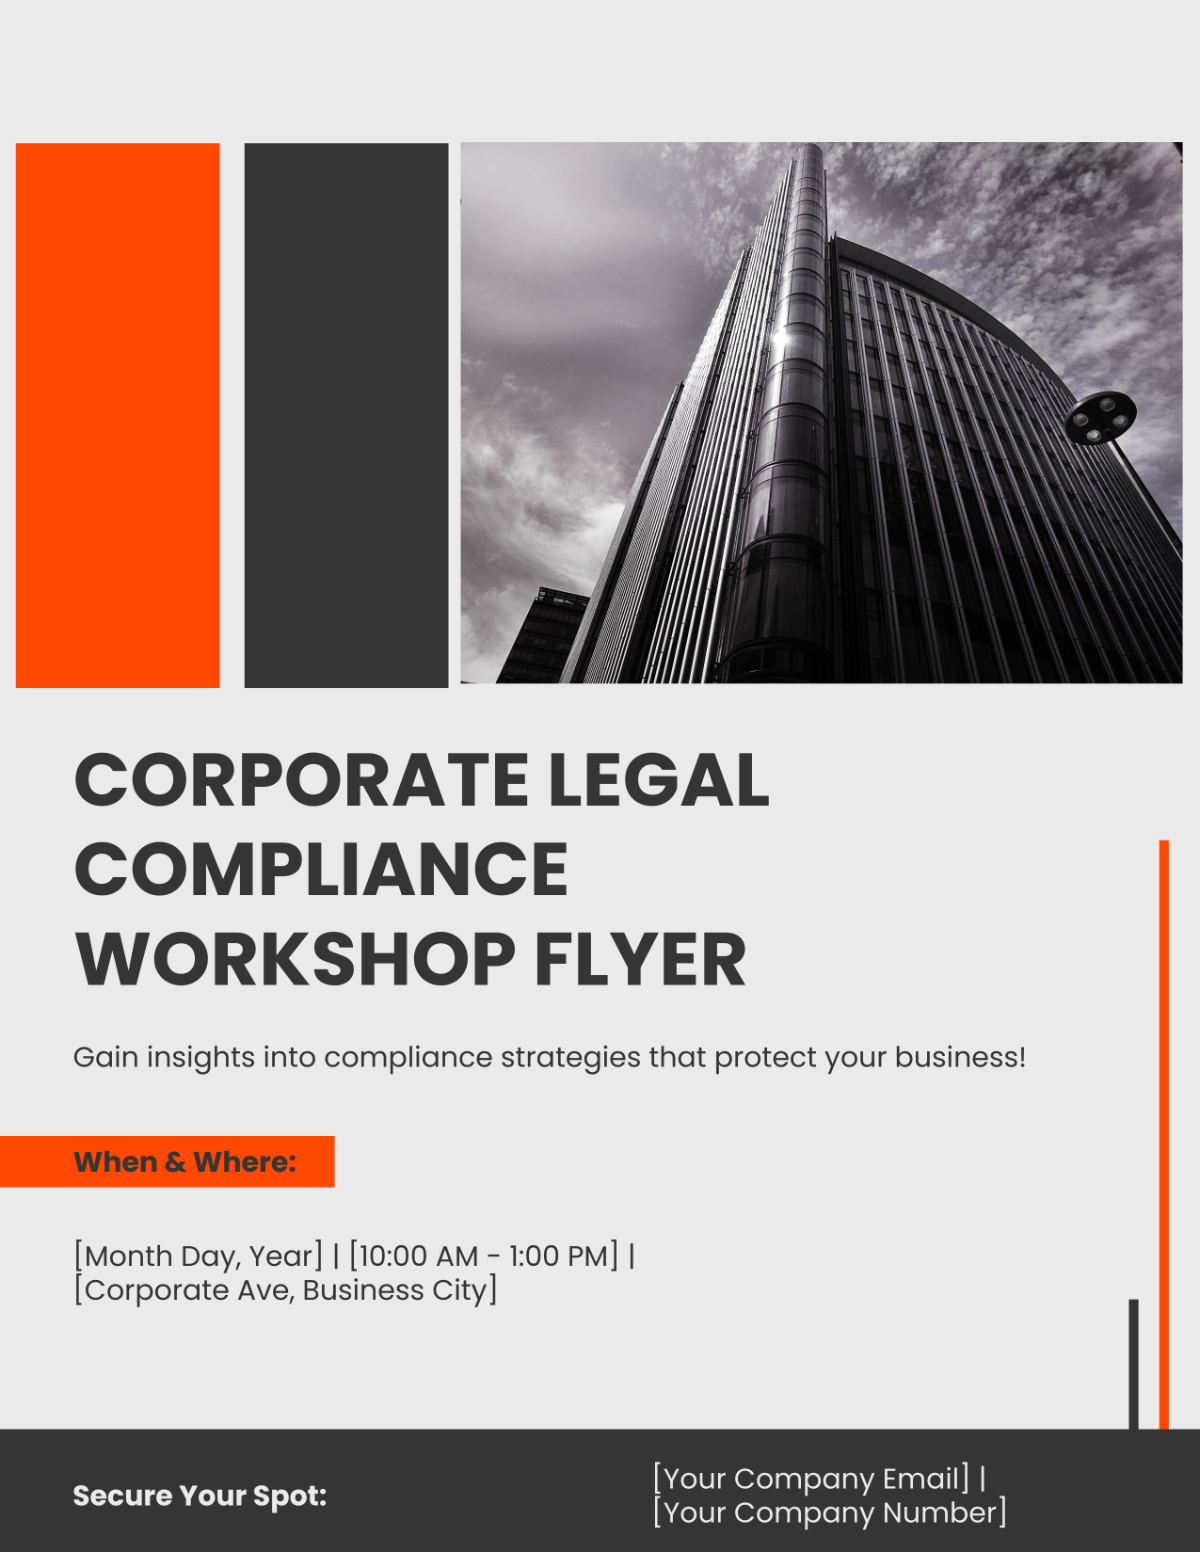 Corporate Legal Compliance Workshop Flyer